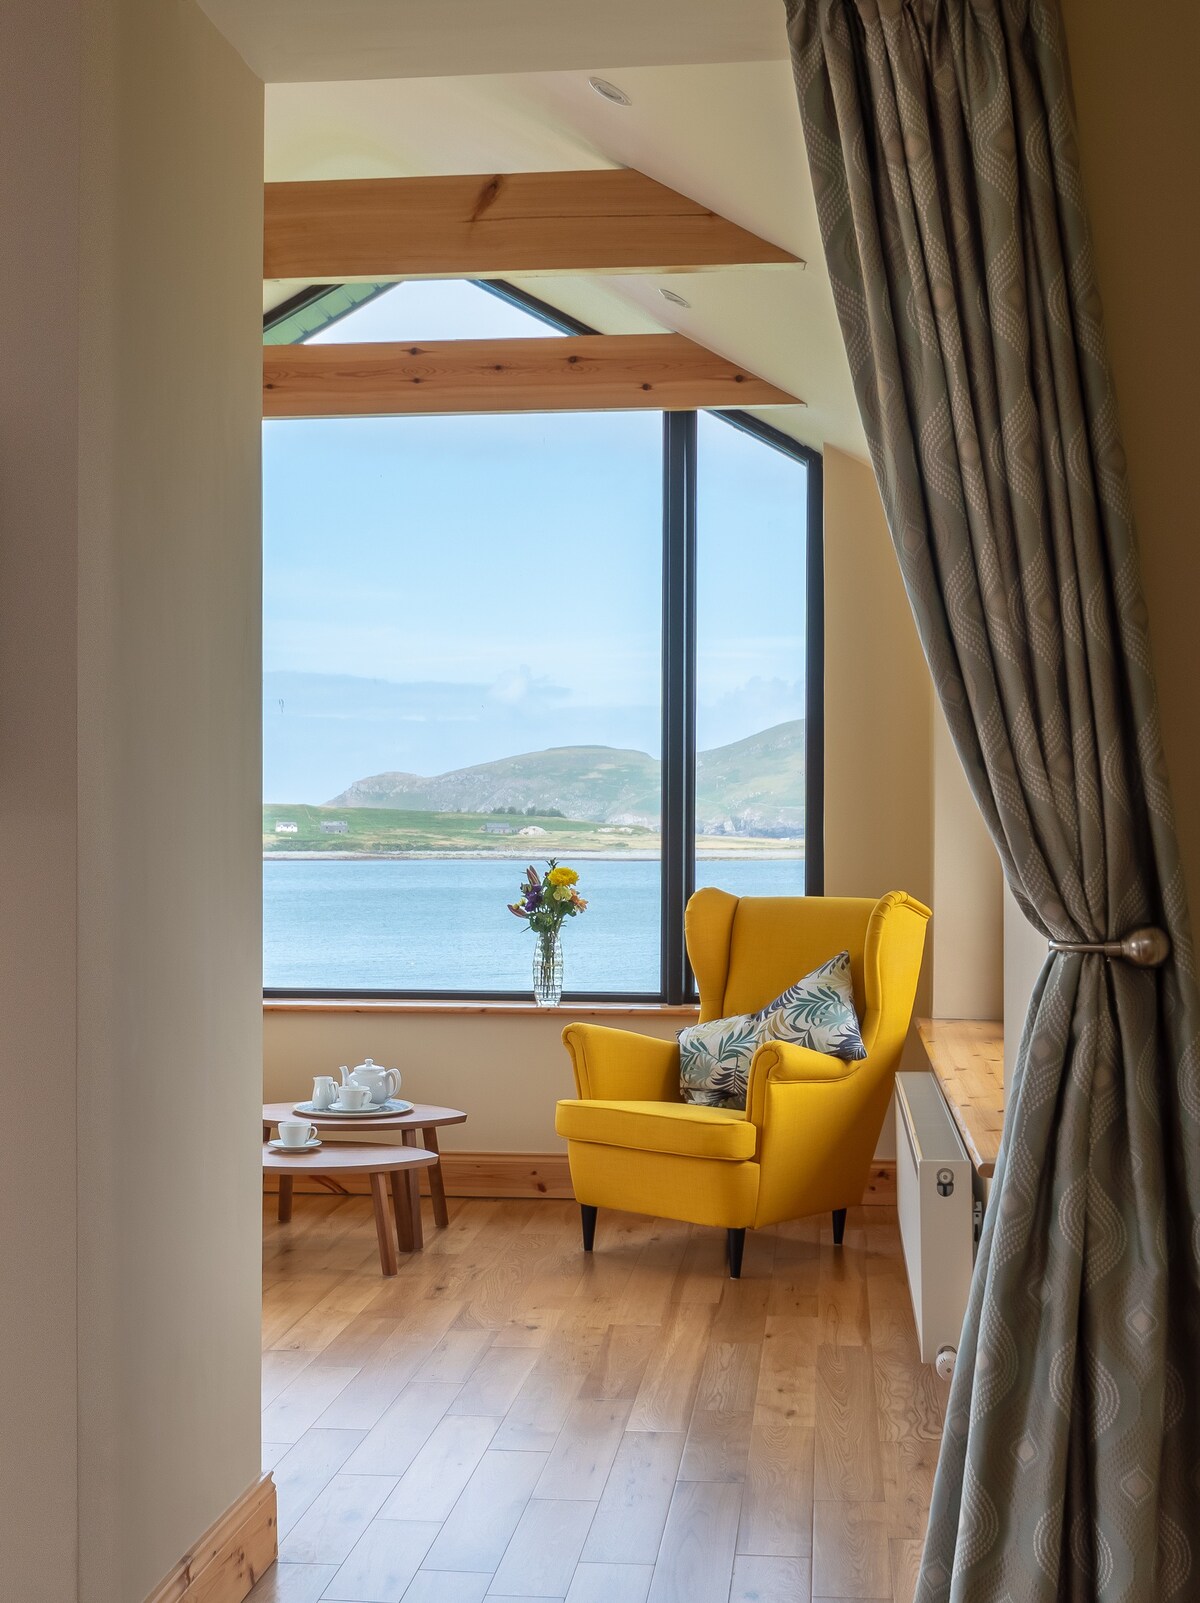 Luxury 4 bedroom holiday home overlooking the sea